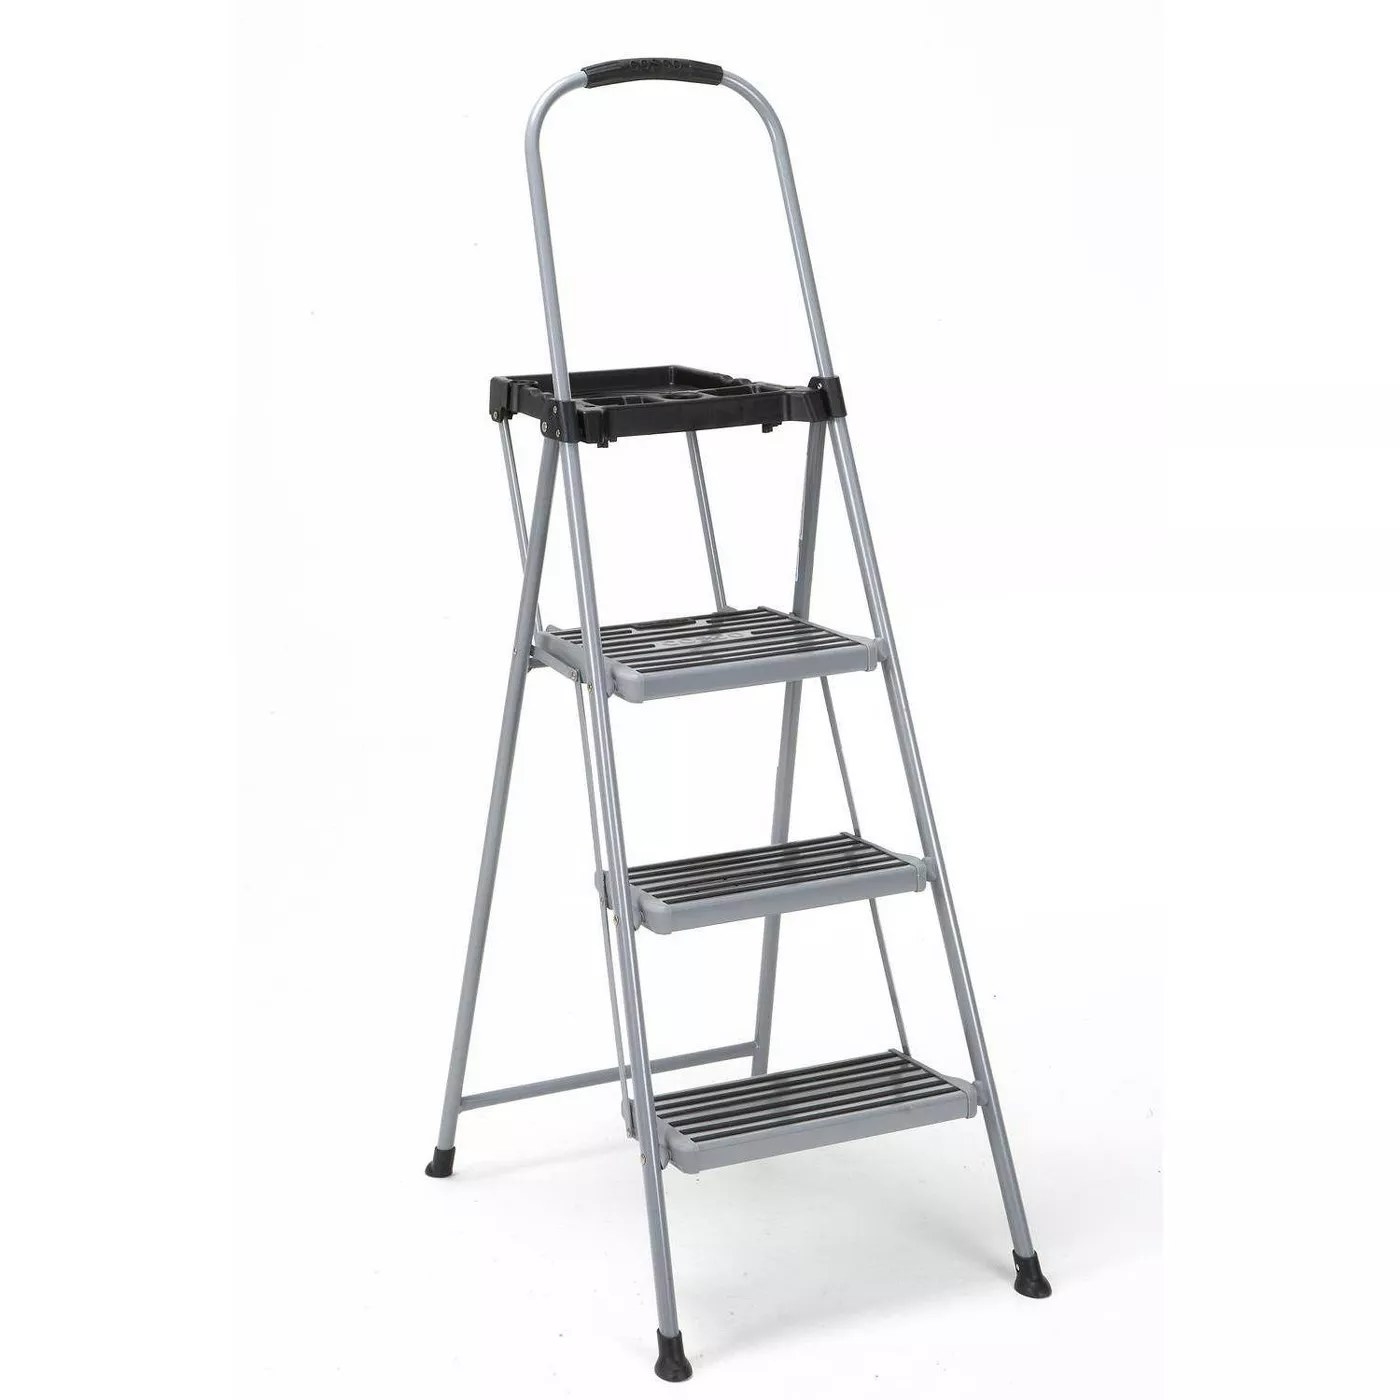 A three-step ladder